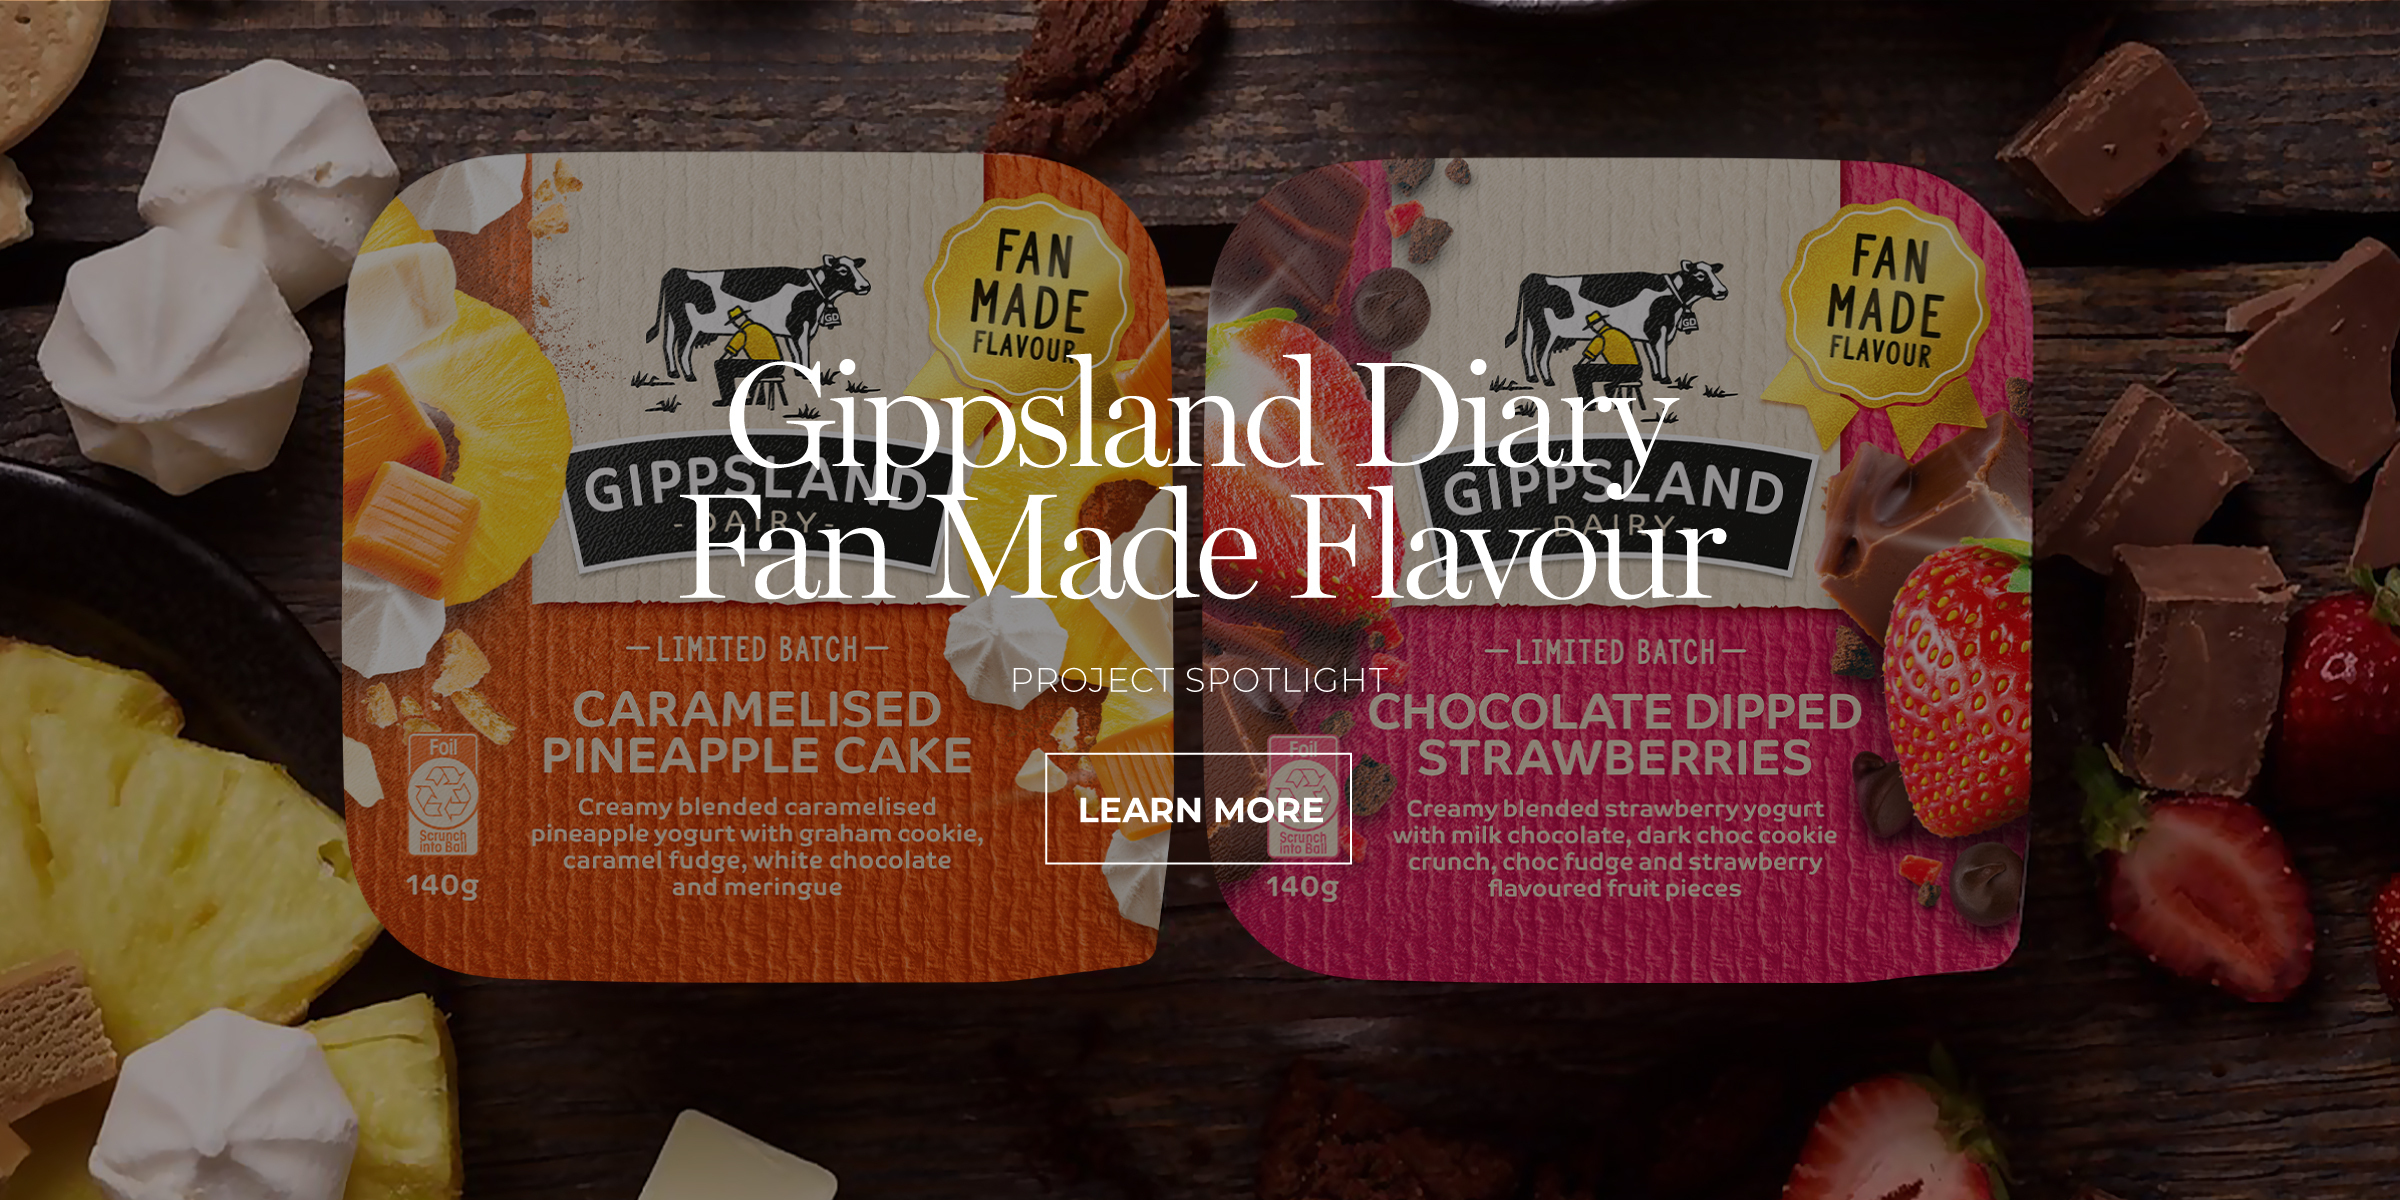 Gippsland-Fan-Made-Flavour-packaging